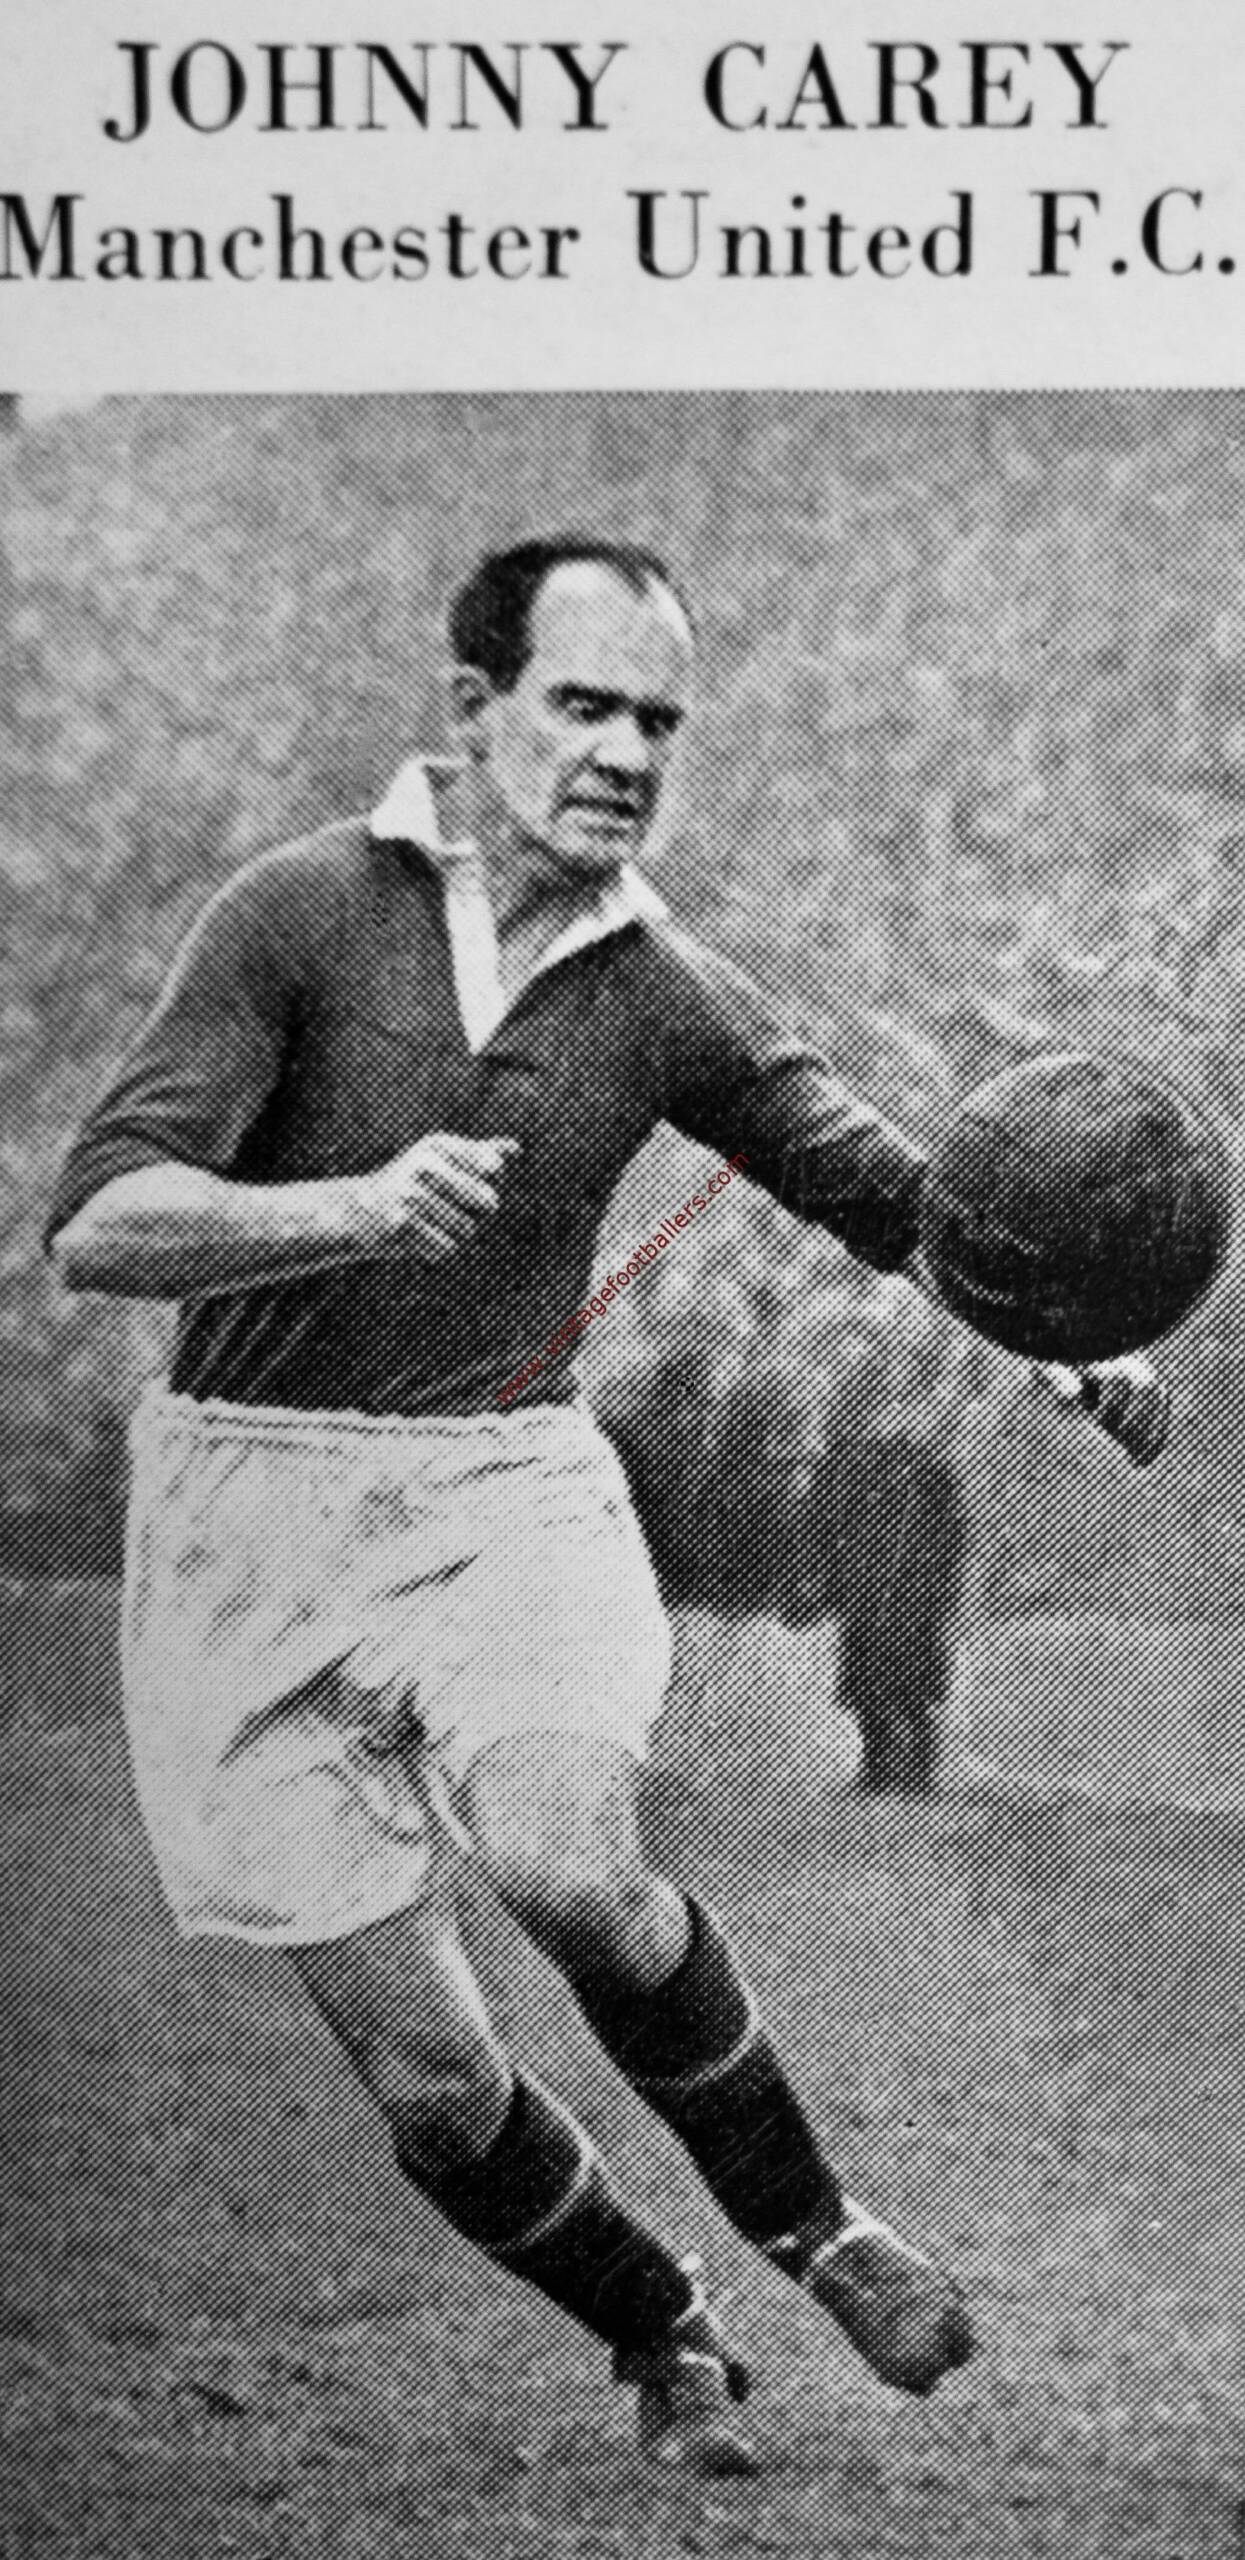 Carey Johnny Image 11 Manchester United 1948